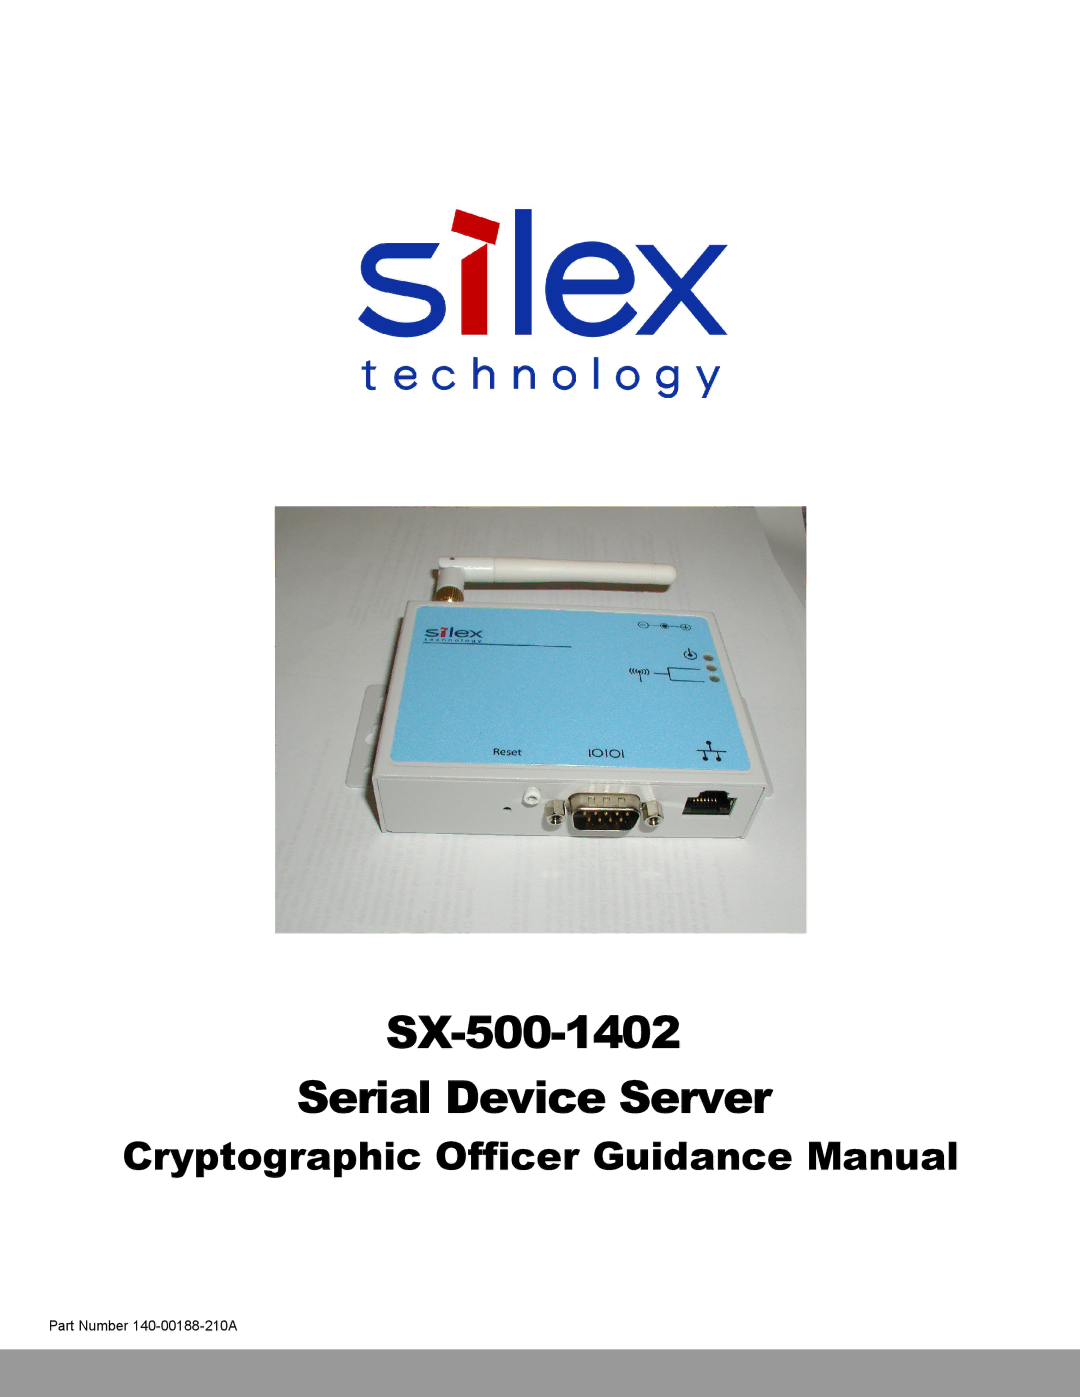 Silex technology manual SX-500-1402 Serial Device Server 